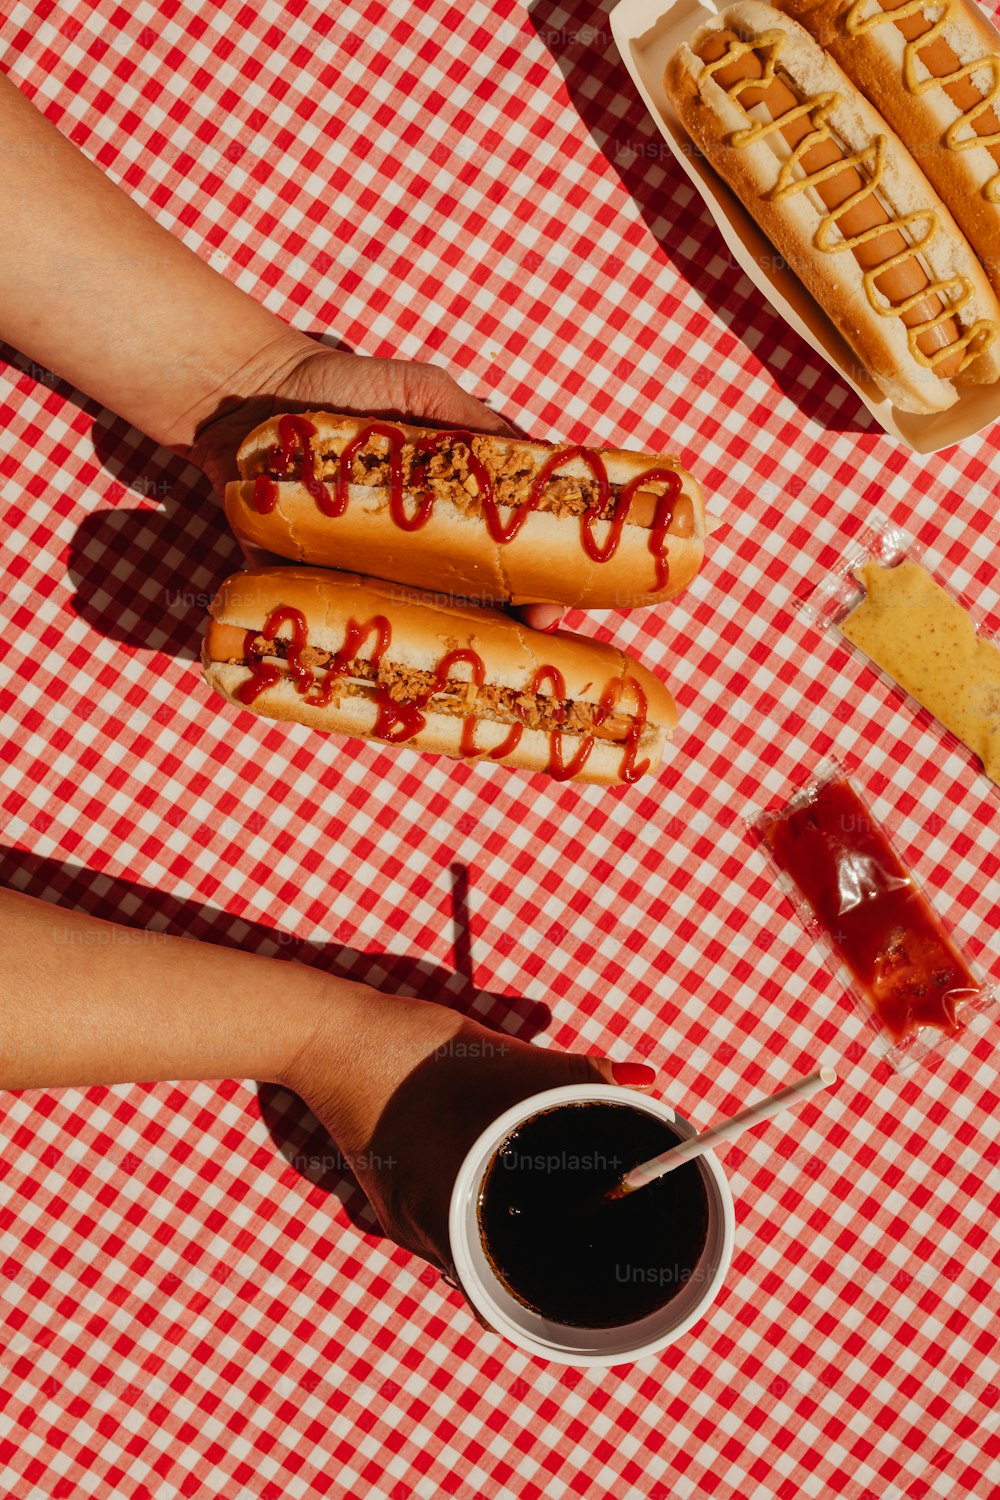 uma mesa coberta com cachorros-quentes cobertos de ketchup